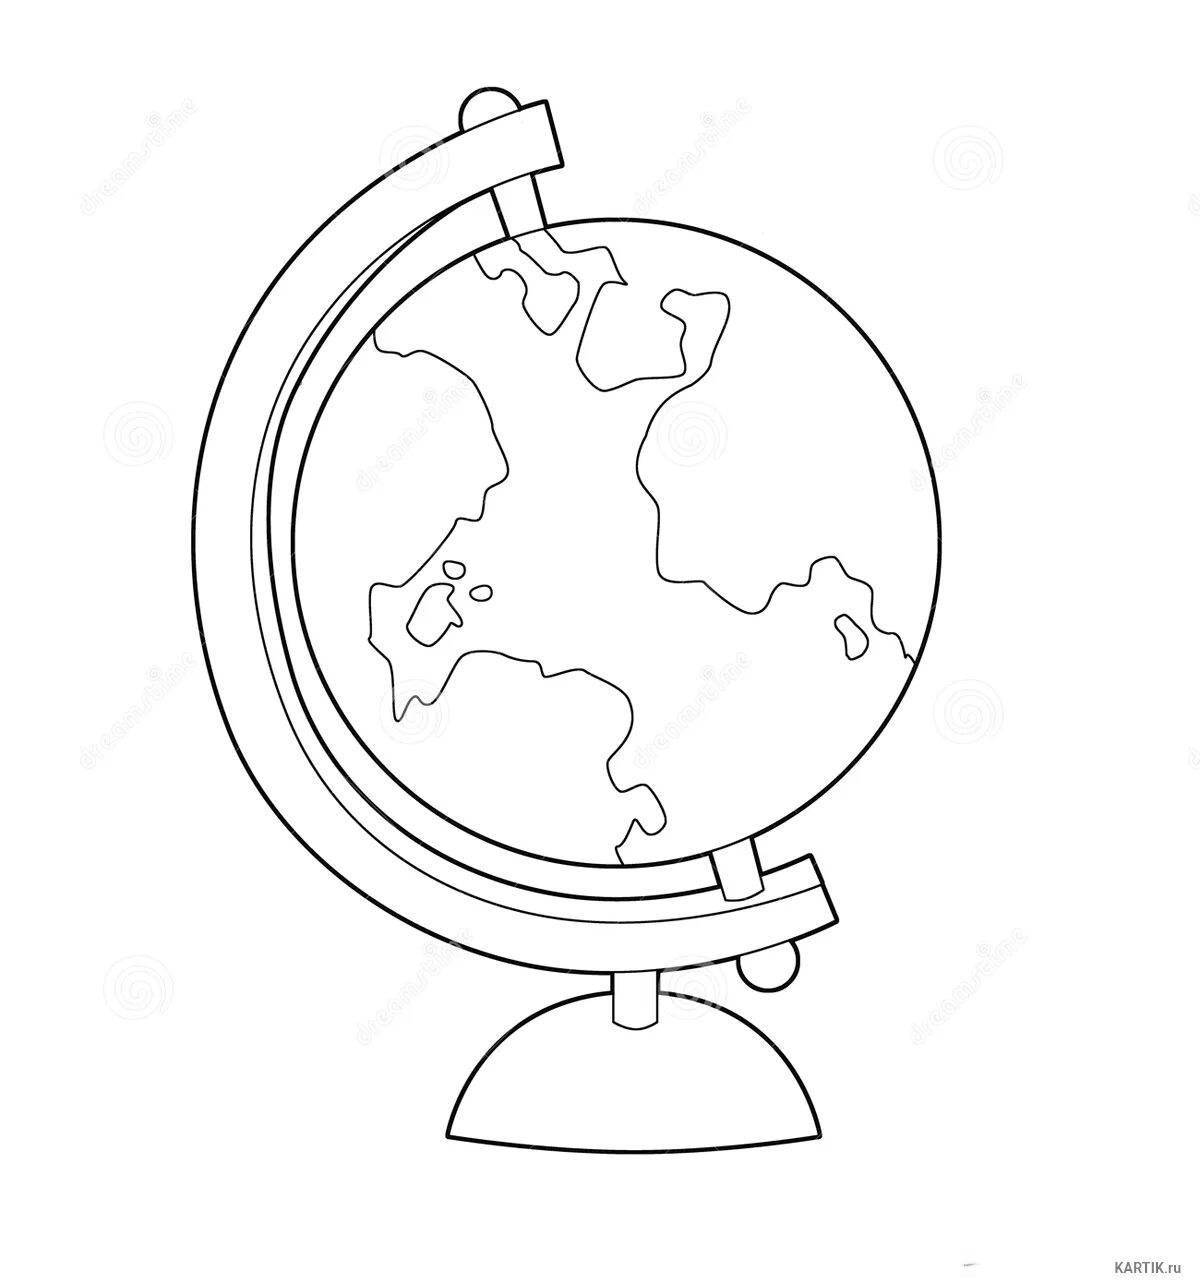 Fun drawing of a globe for kids